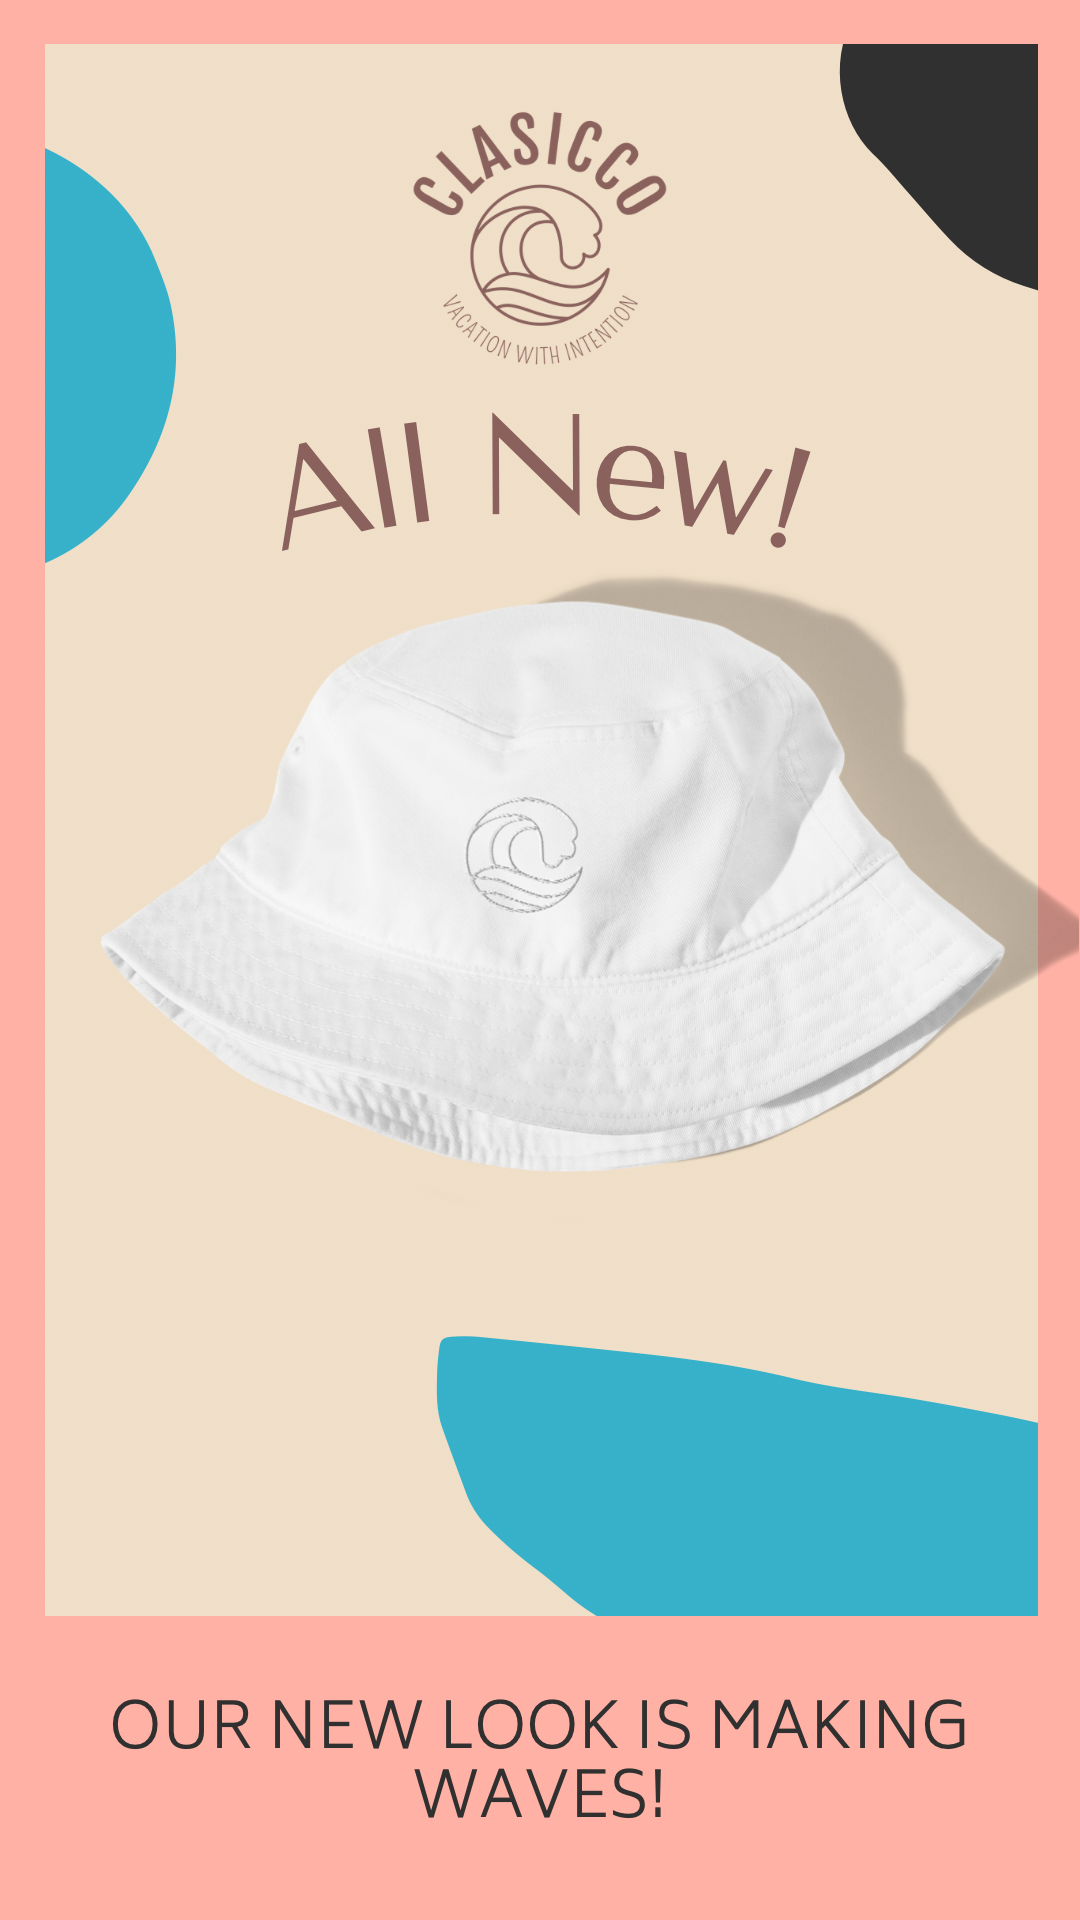 Organic Clasicco WAVE bucket hat